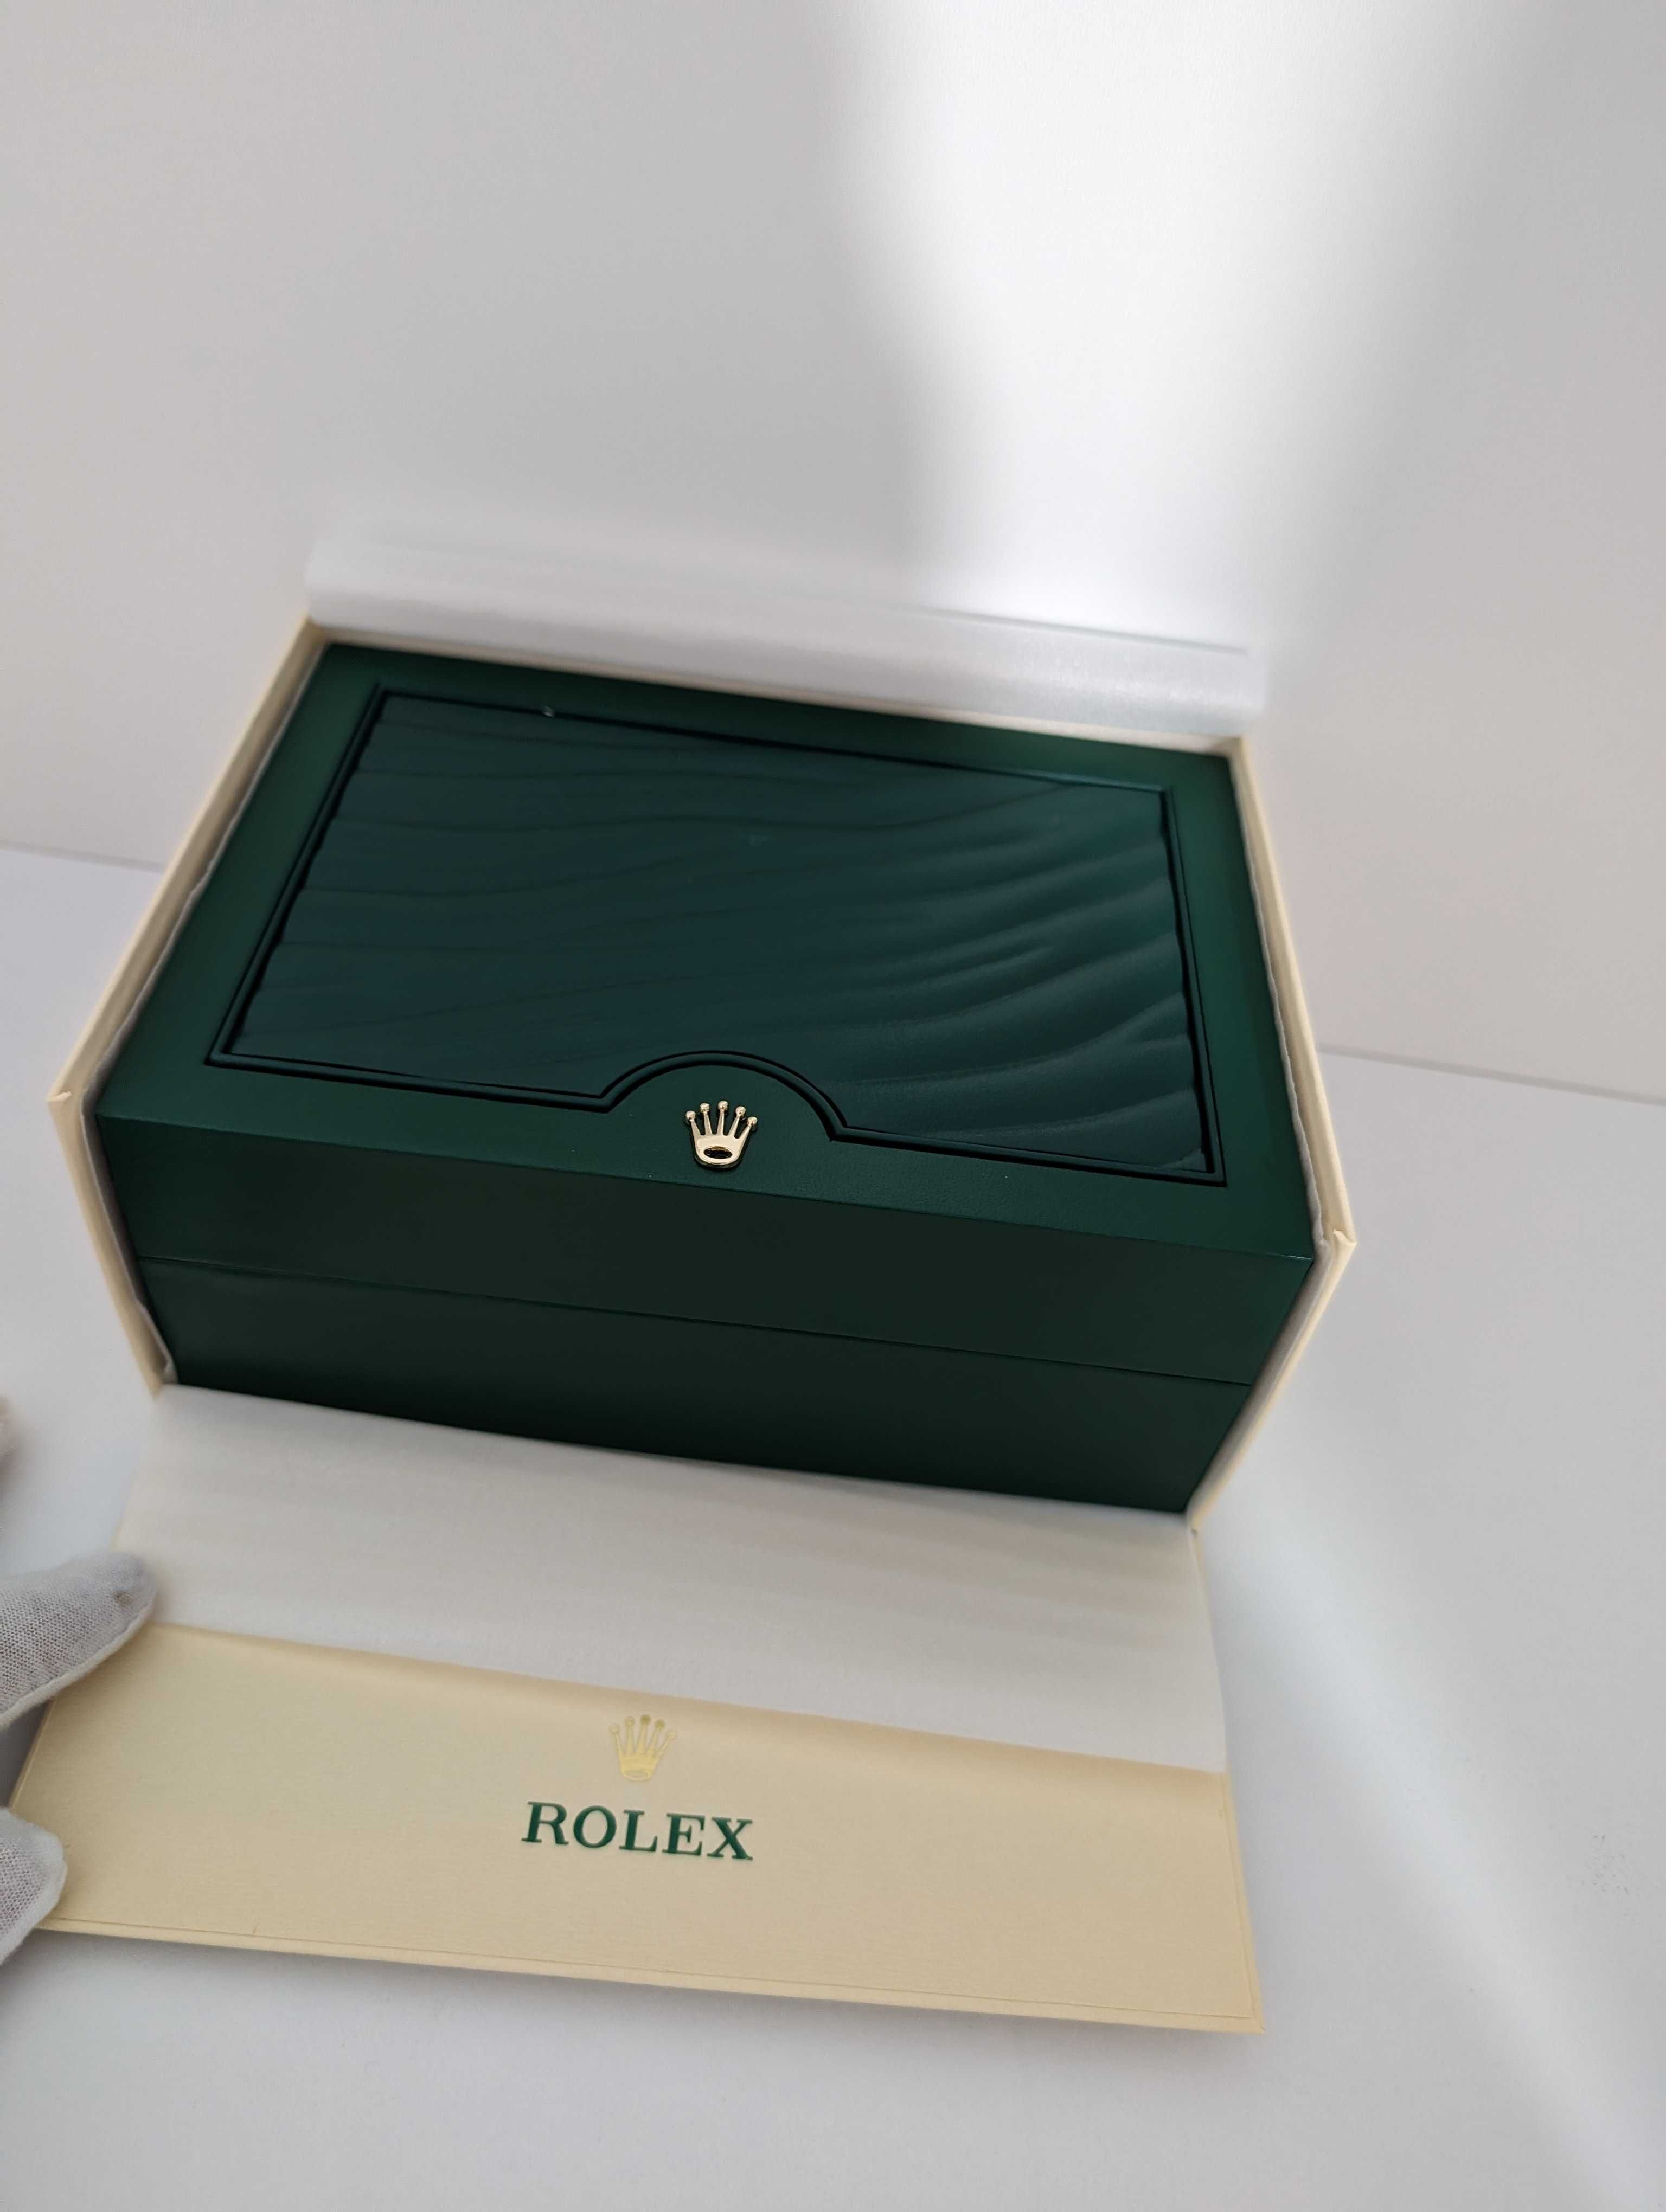 Cutie Rolex NOUA pachet complet Varianta de TOP Calitate AAA